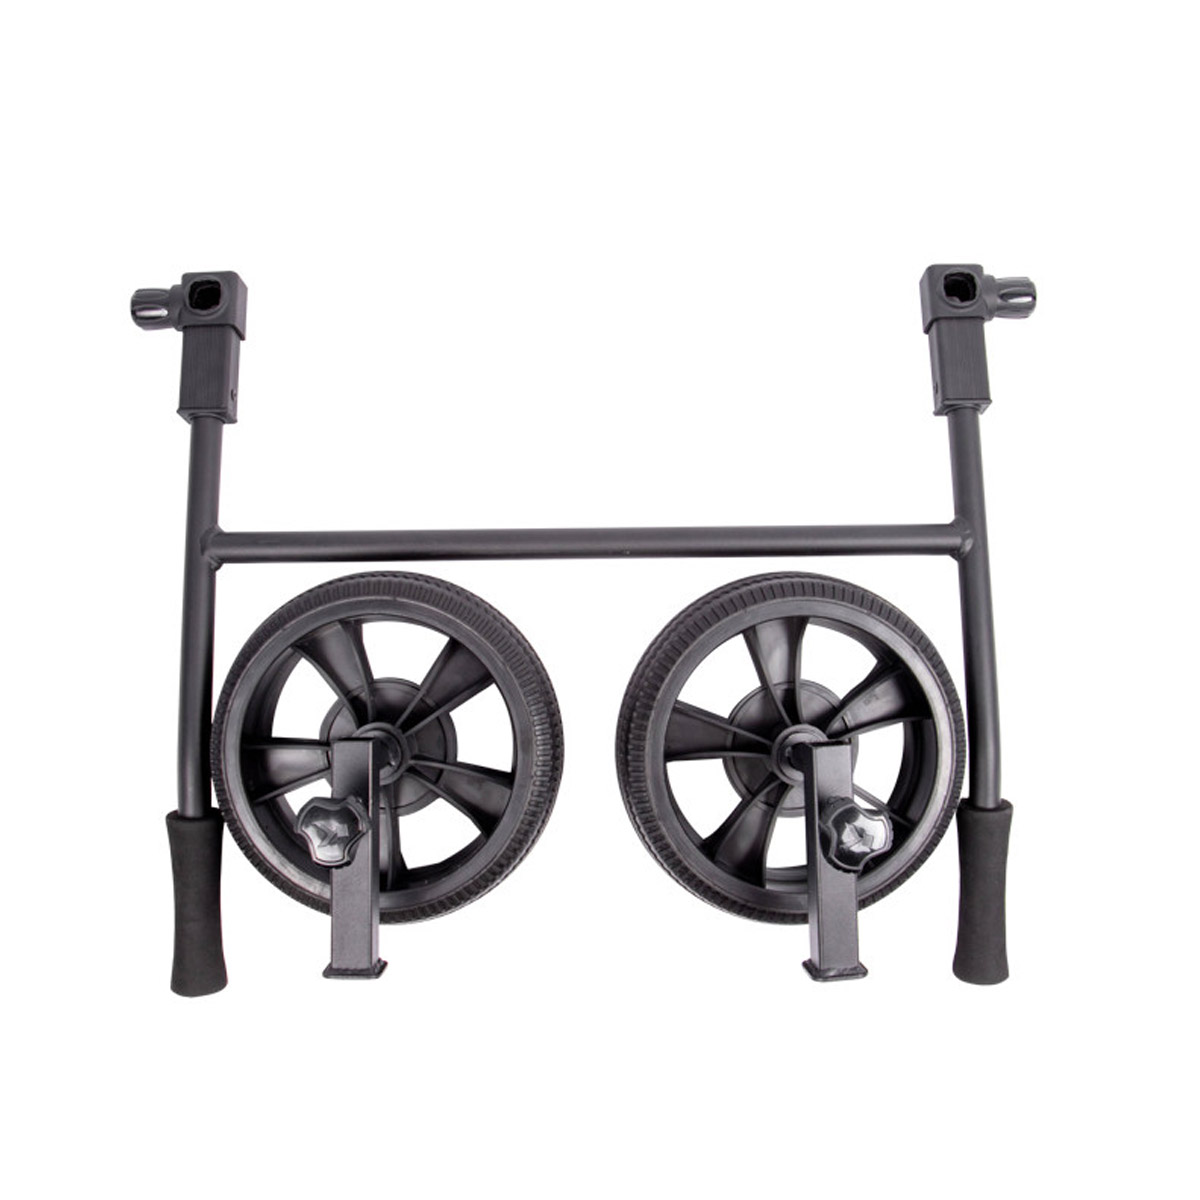 Korum Accessory Chair Twin Wheel Barrow